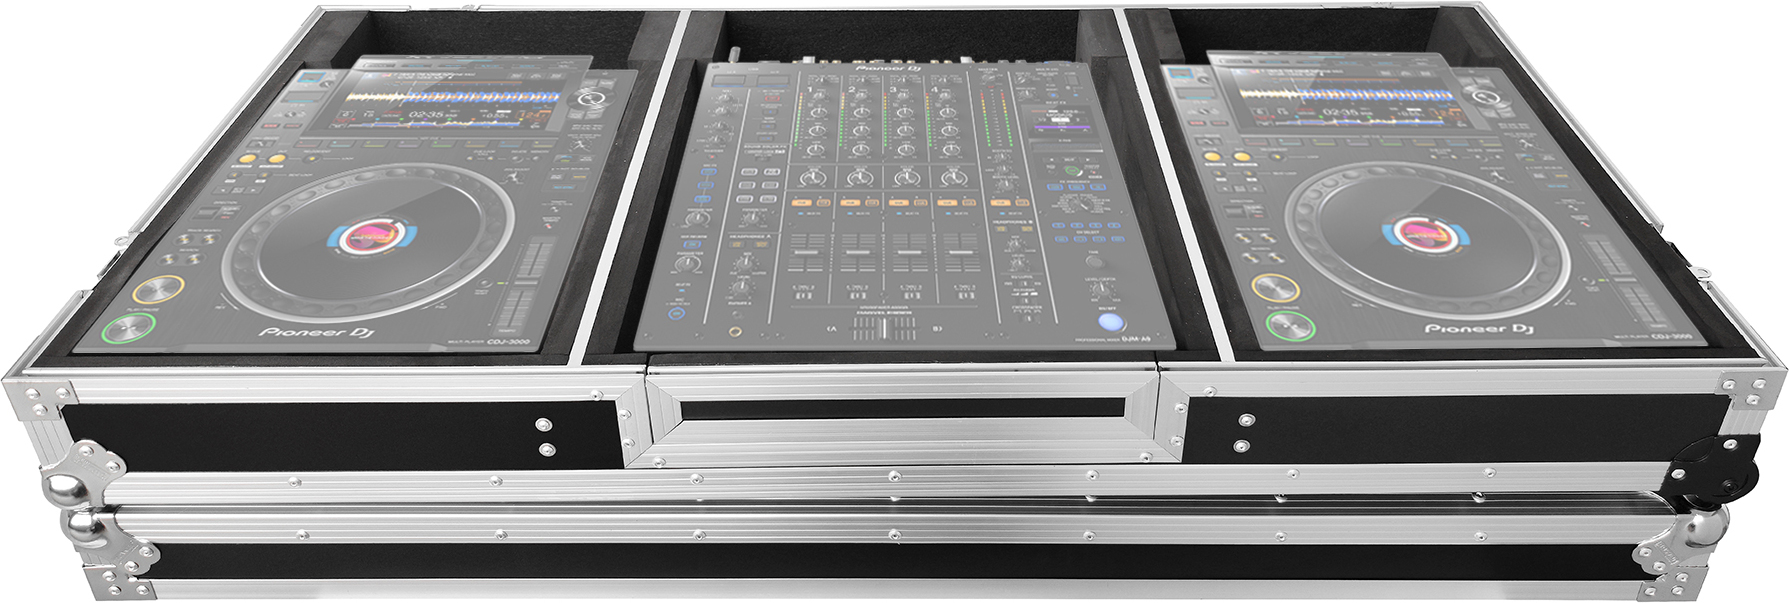 Power Acoustics Pcdm 3000 A9 - DJ flightcase - Main picture